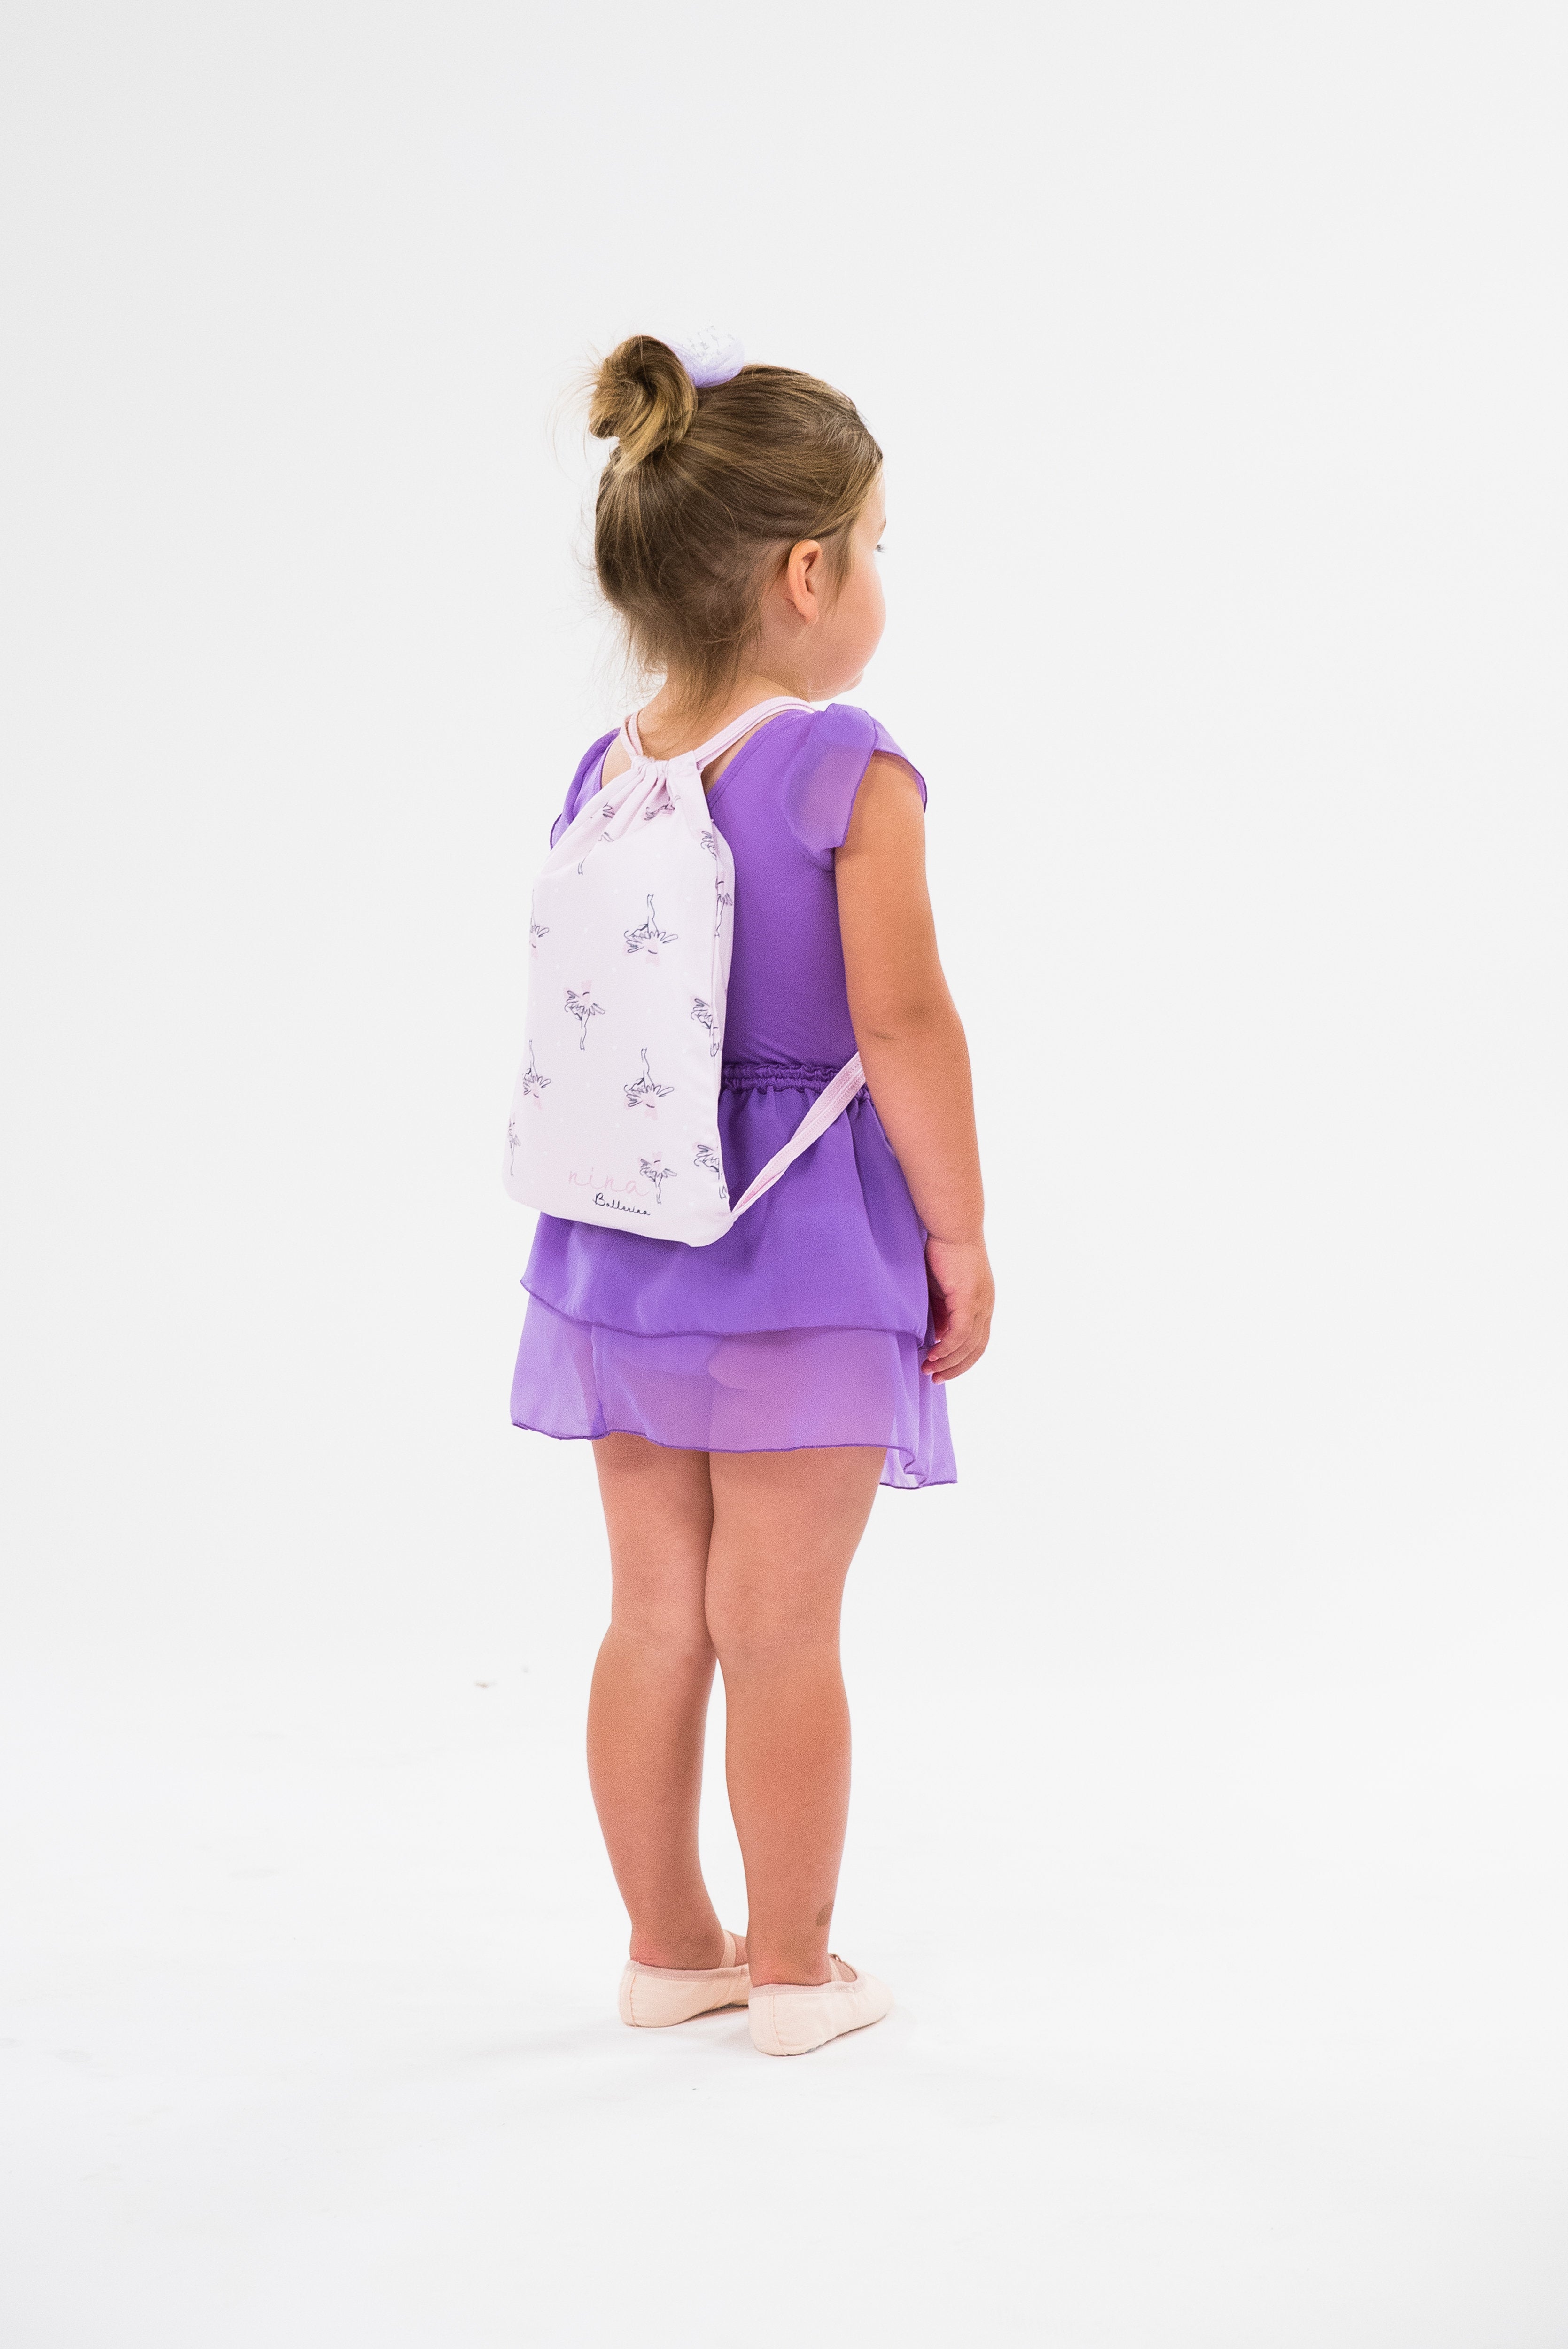 Ballet backpack - 42 x 29 x 17 cm - Polyester - SimbaShop.nl